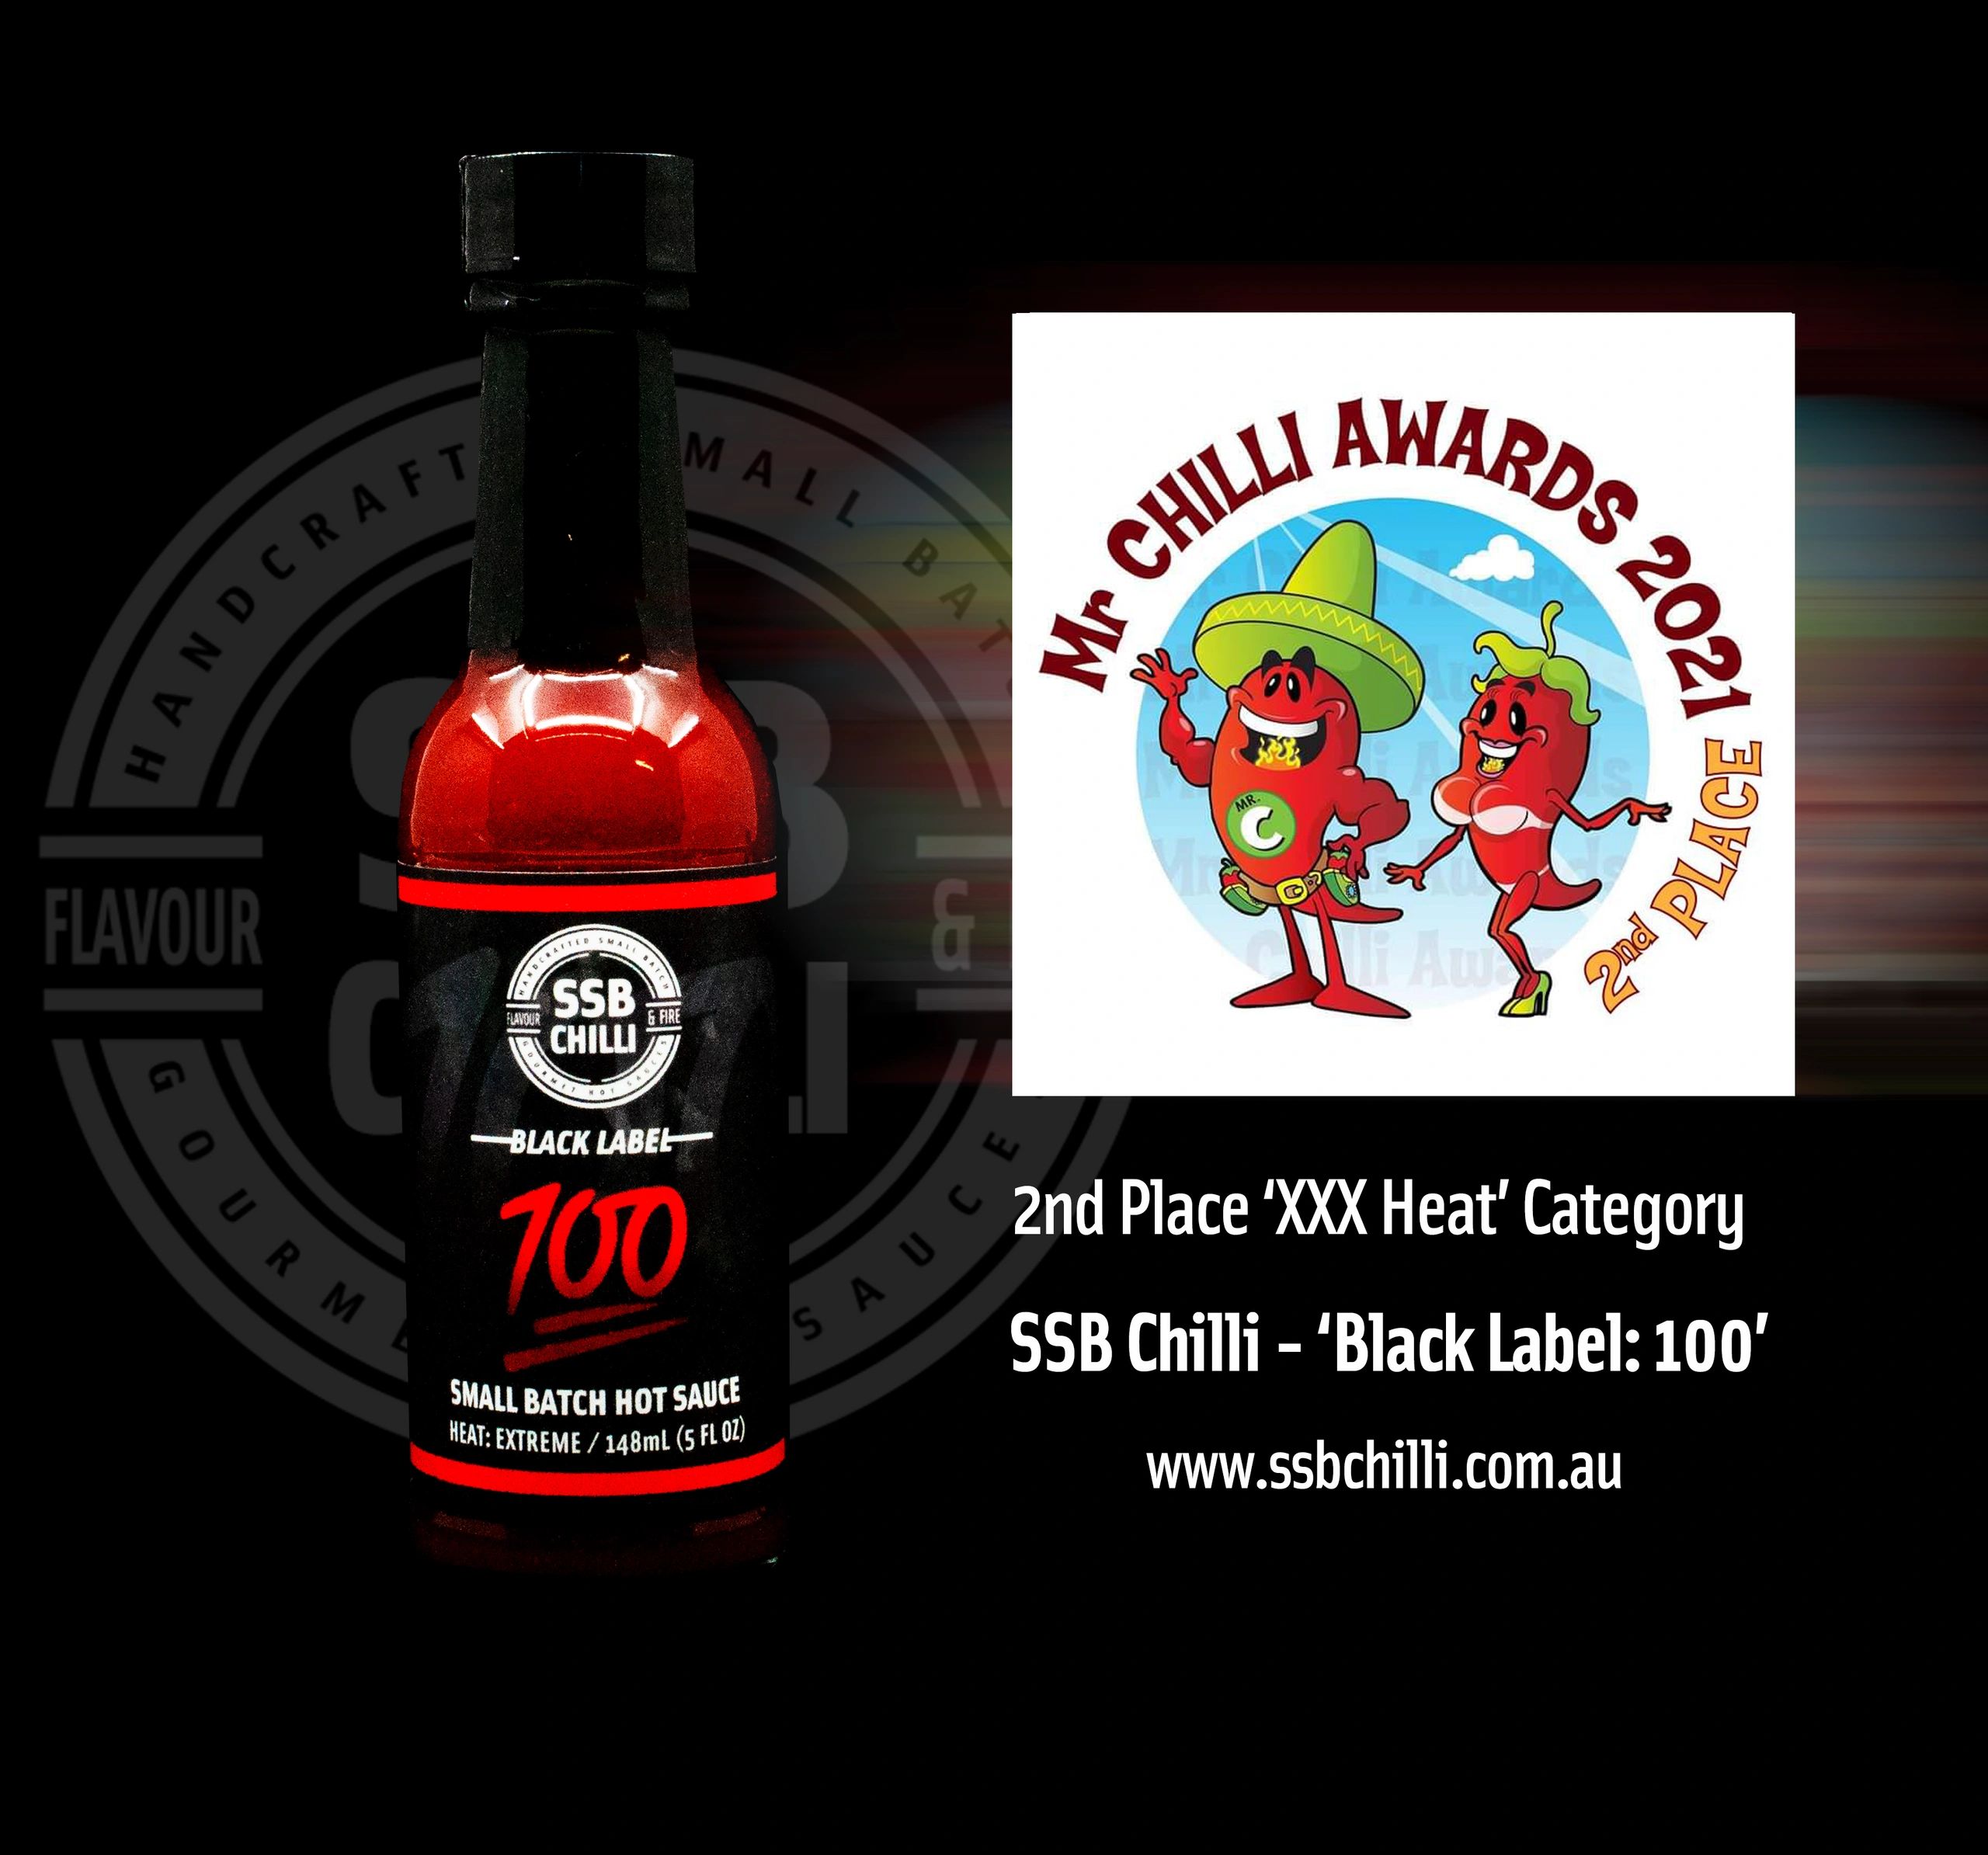 hot sauce award winning ssb chilli made in australia chilli sauce natural spicy